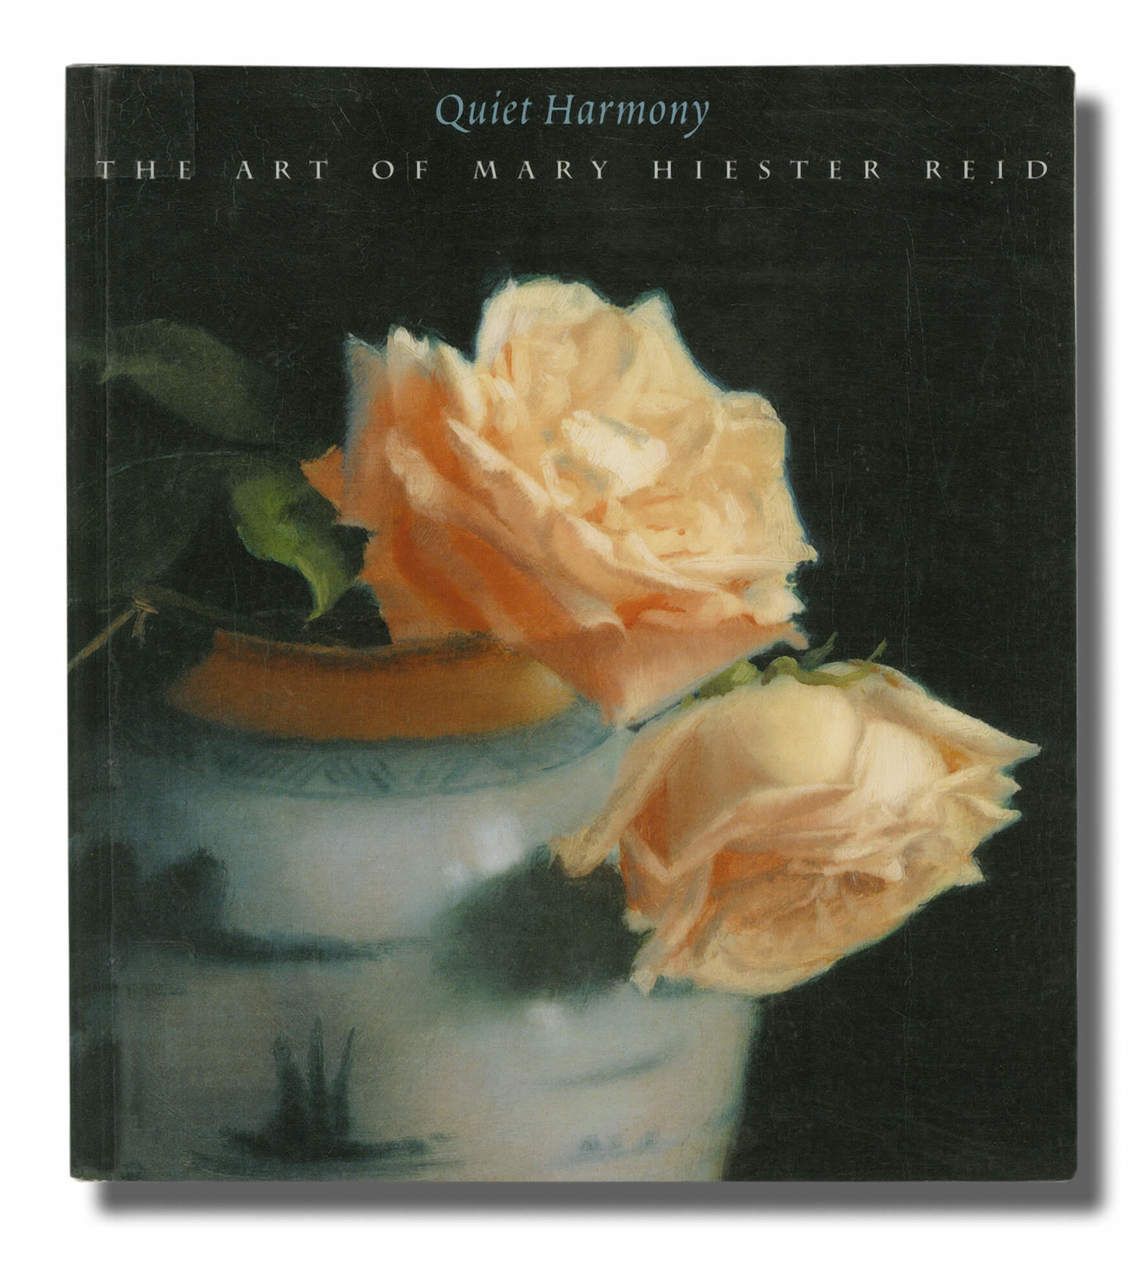 Catalogue de l’exposition Quiet Harmony: The Art of Mary Hiester Reid (Harmonie tranquille : l’art de Mary Hiester Reid), 2000, Musée des beaux-arts de l’Ontario, Toronto